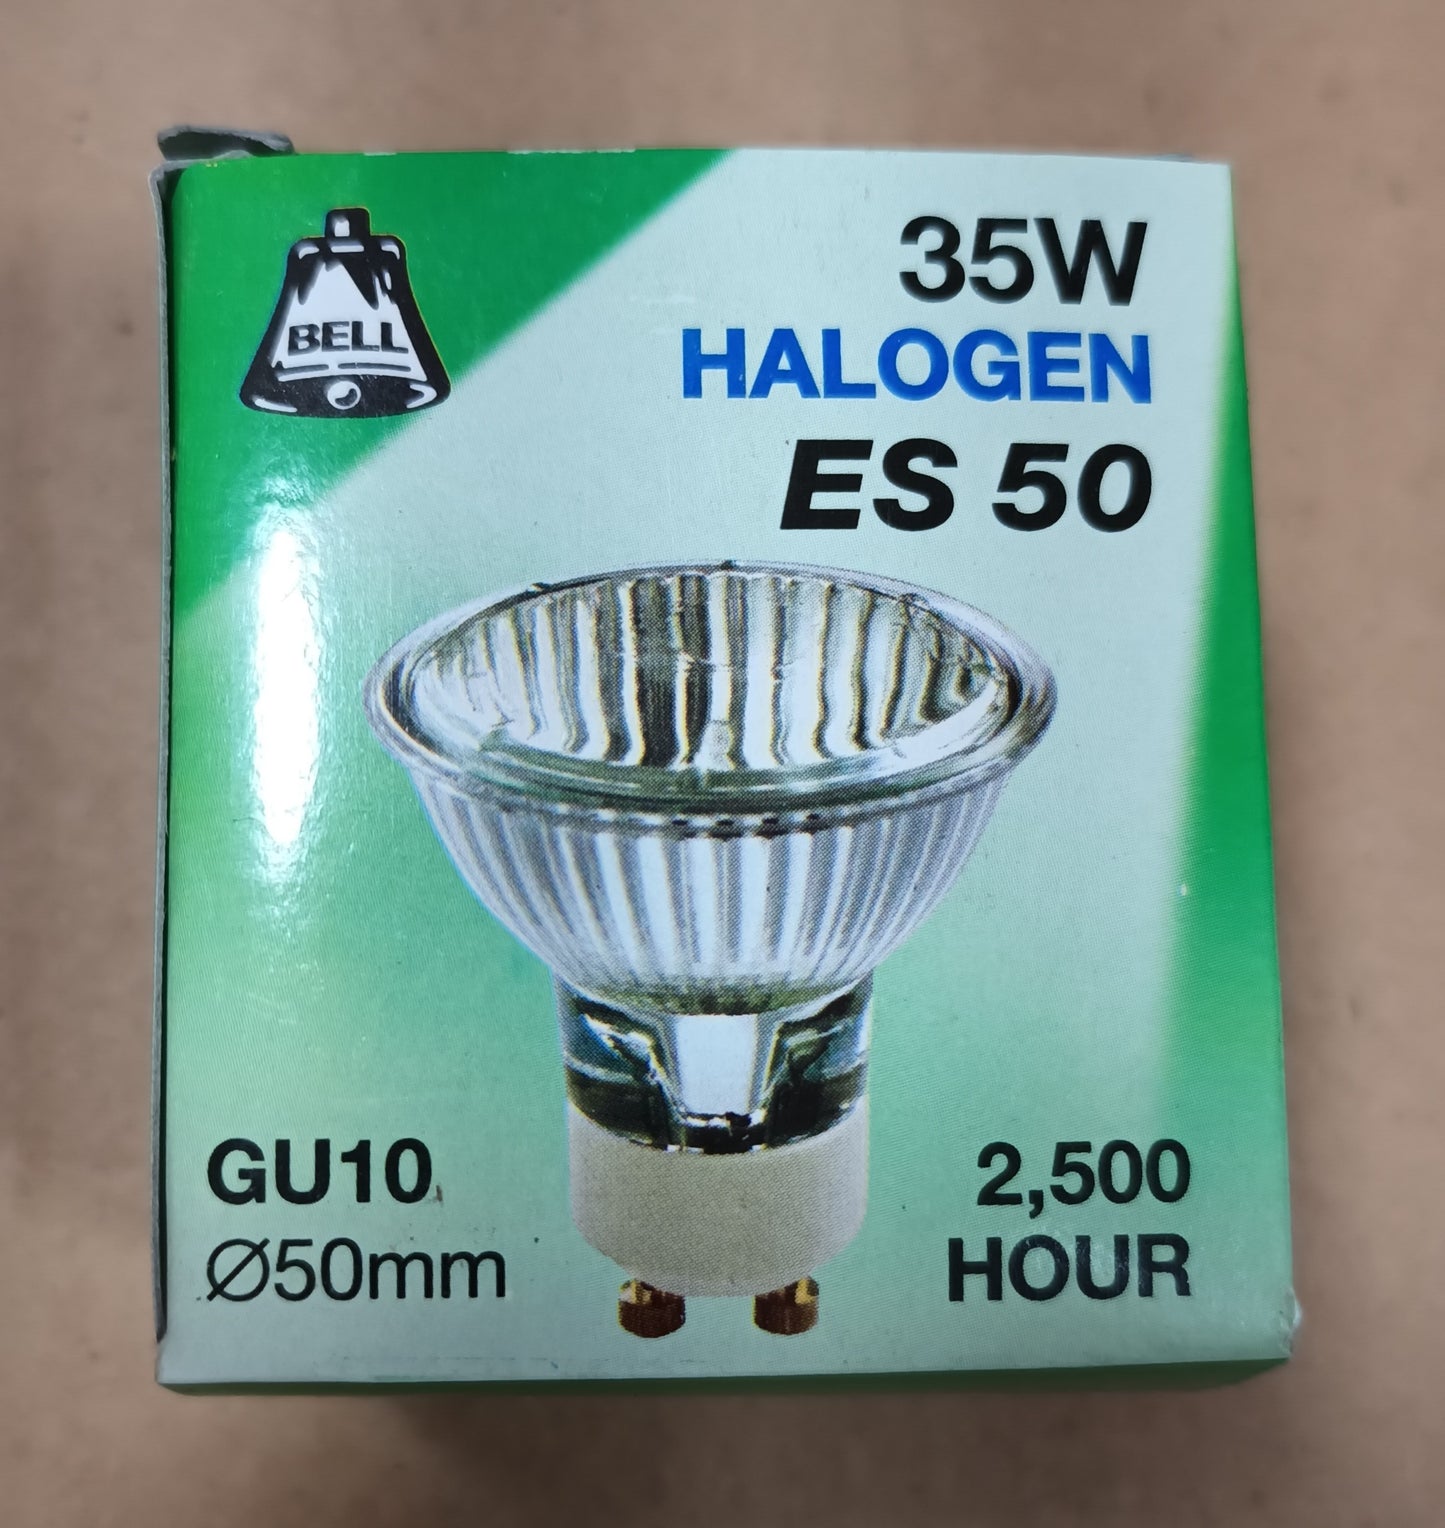 GU10 35w Halogen 2,500h by Bell